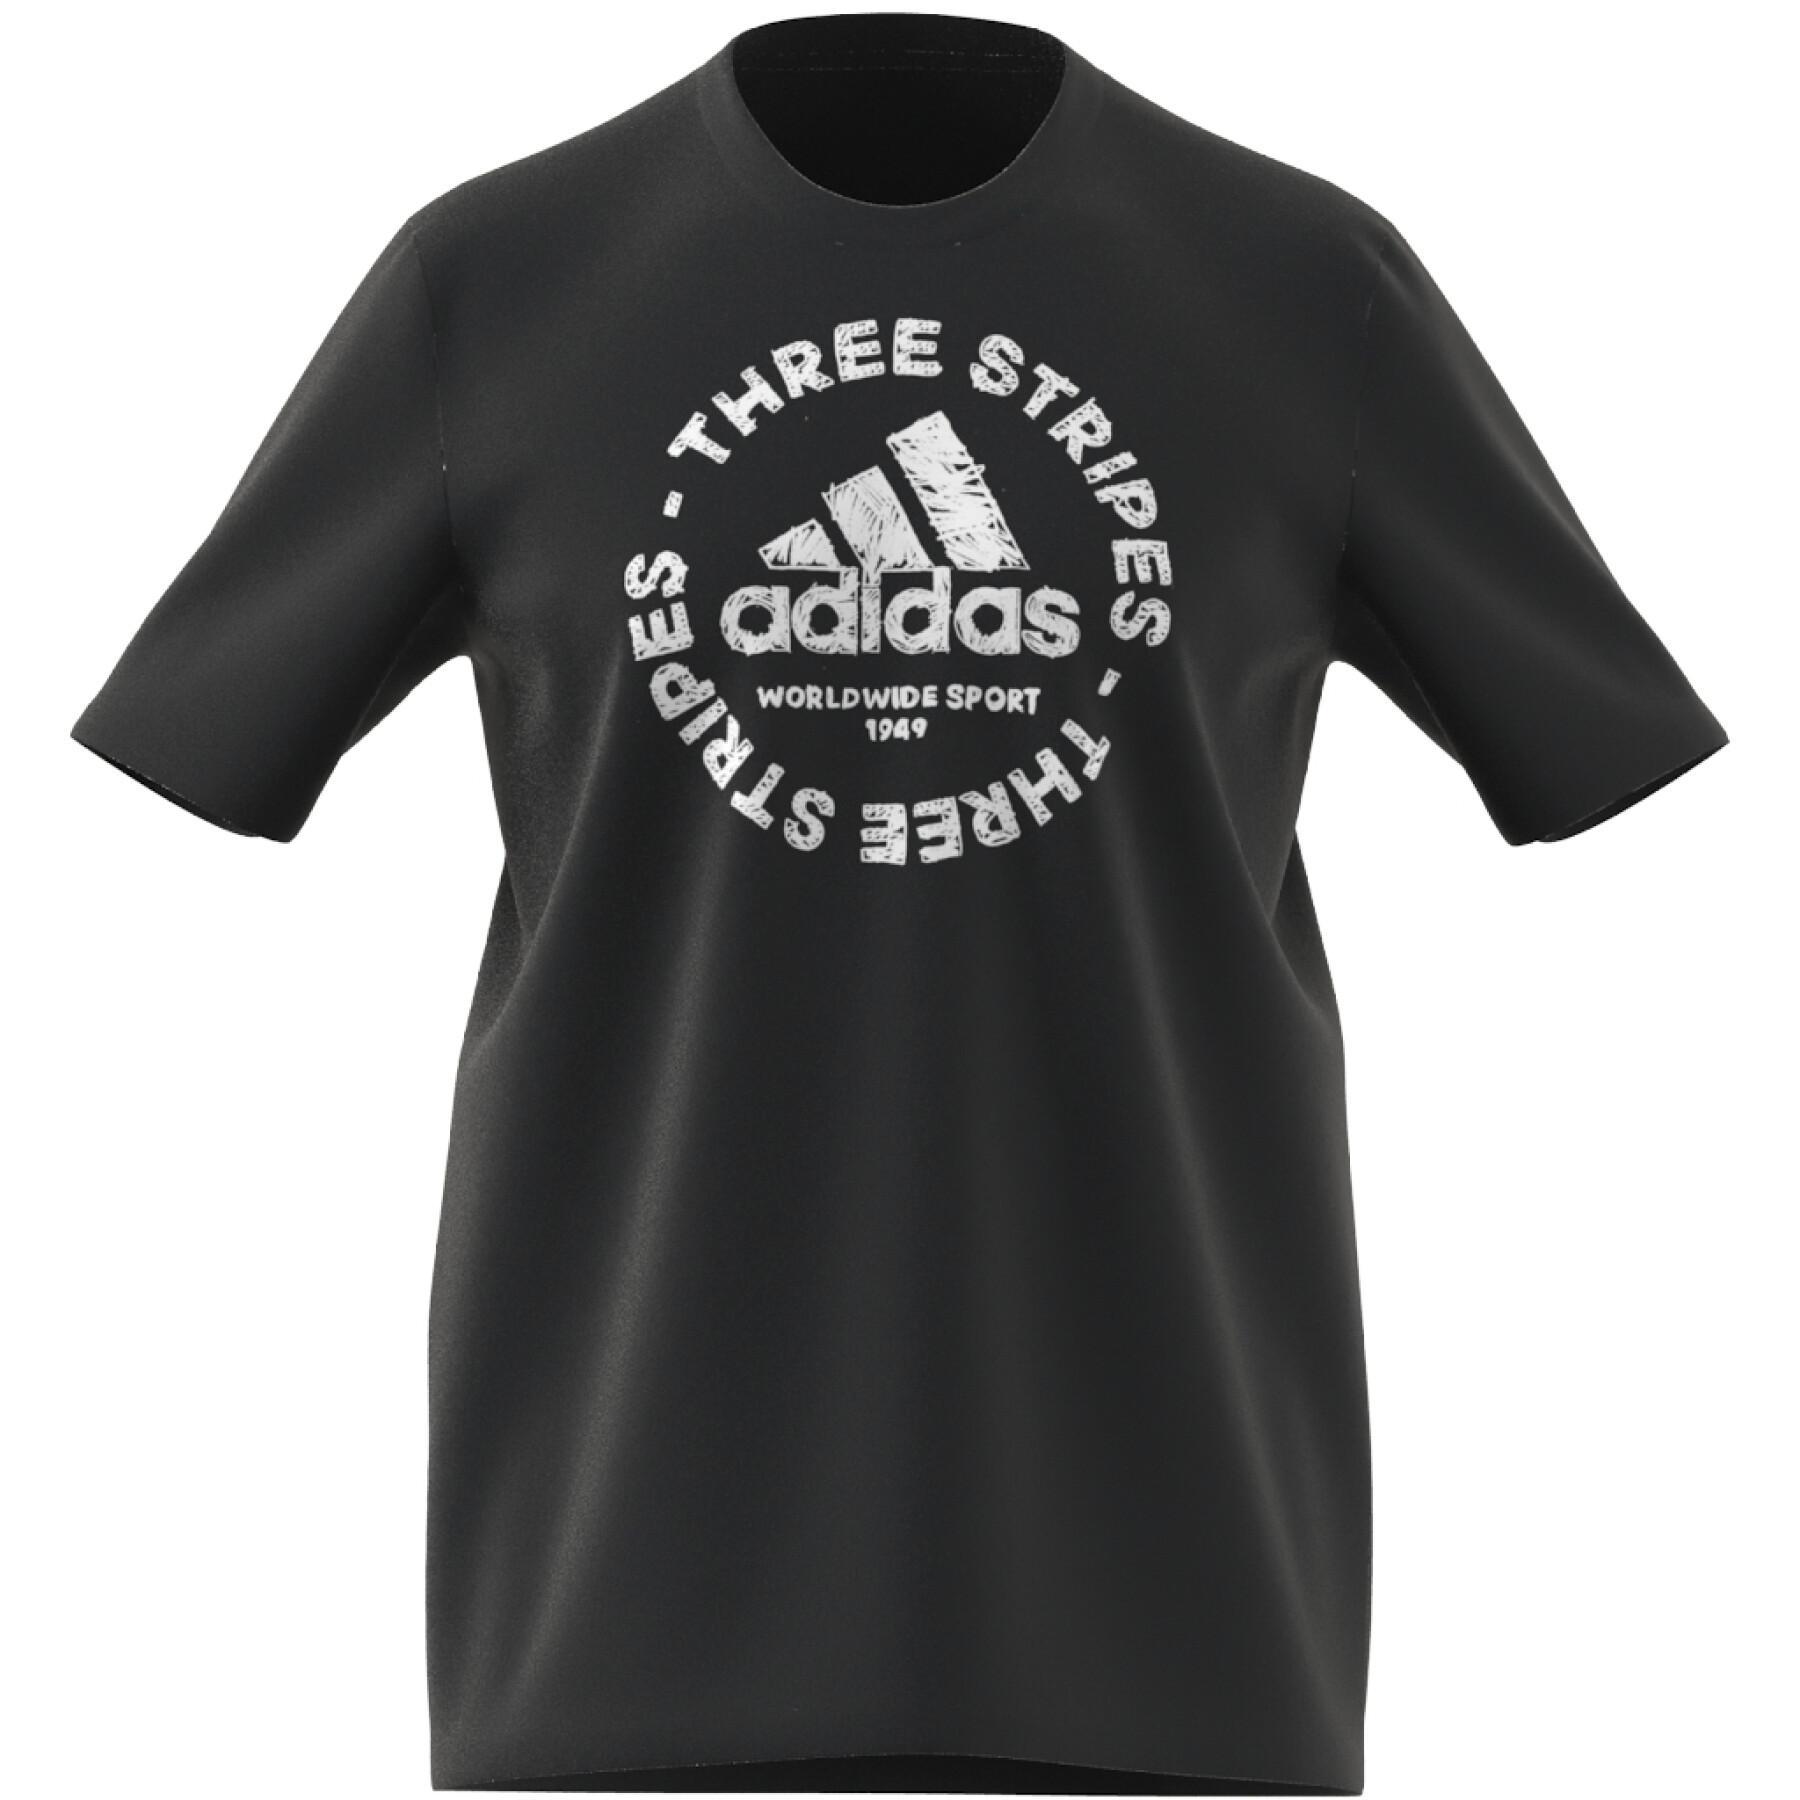 Graphic T-shirt emblem of sketch adidas